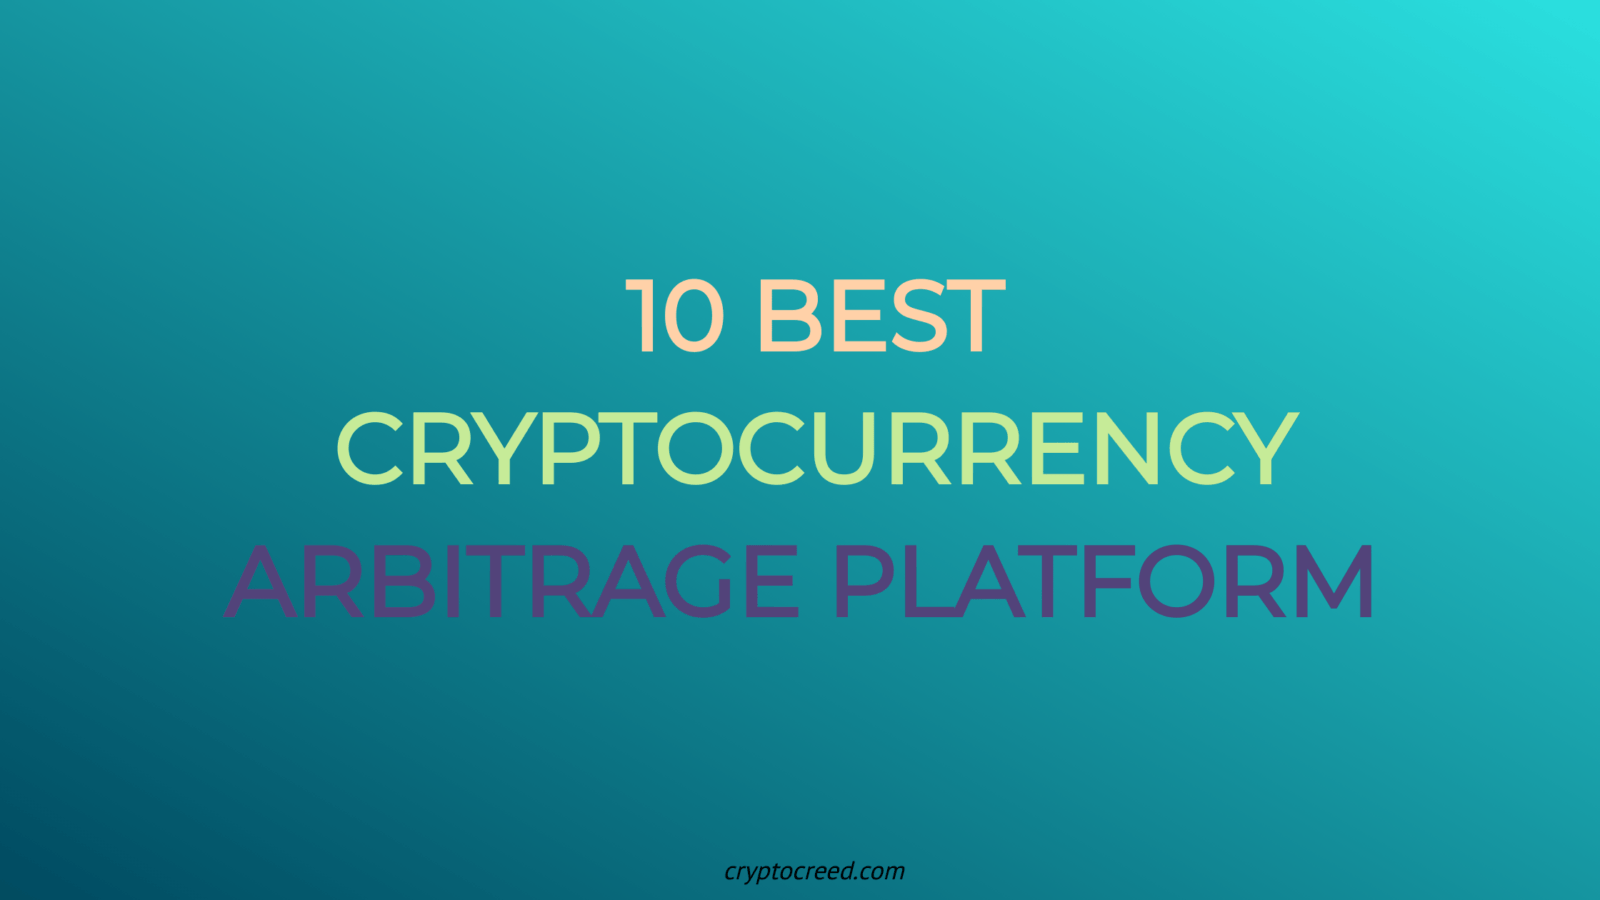 Top 5 Cryptocurrency Arbitrage Platform To Make Profit